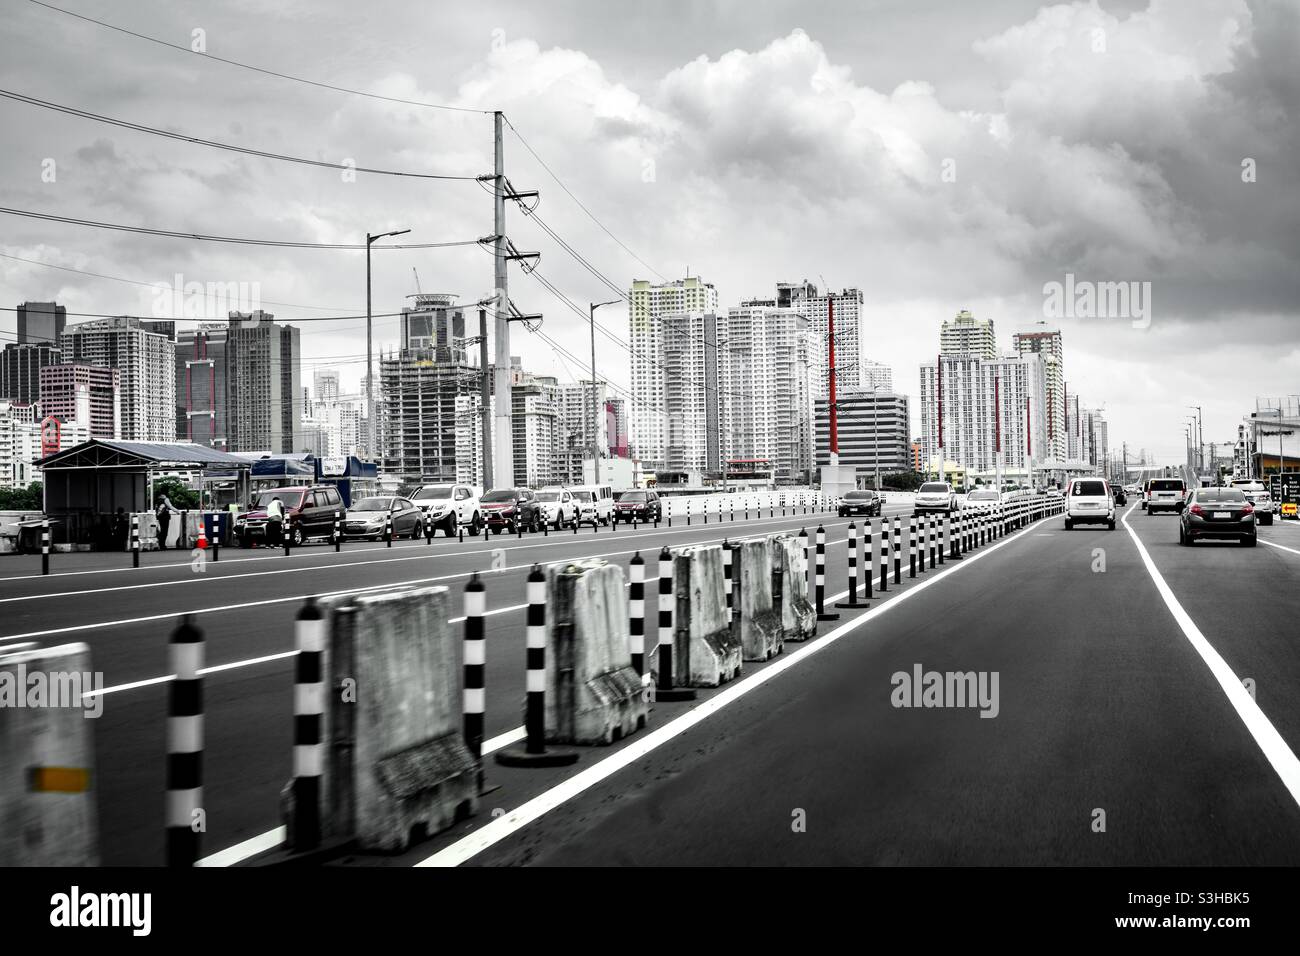 Philippine metropolitan infrastructure Stock Photo